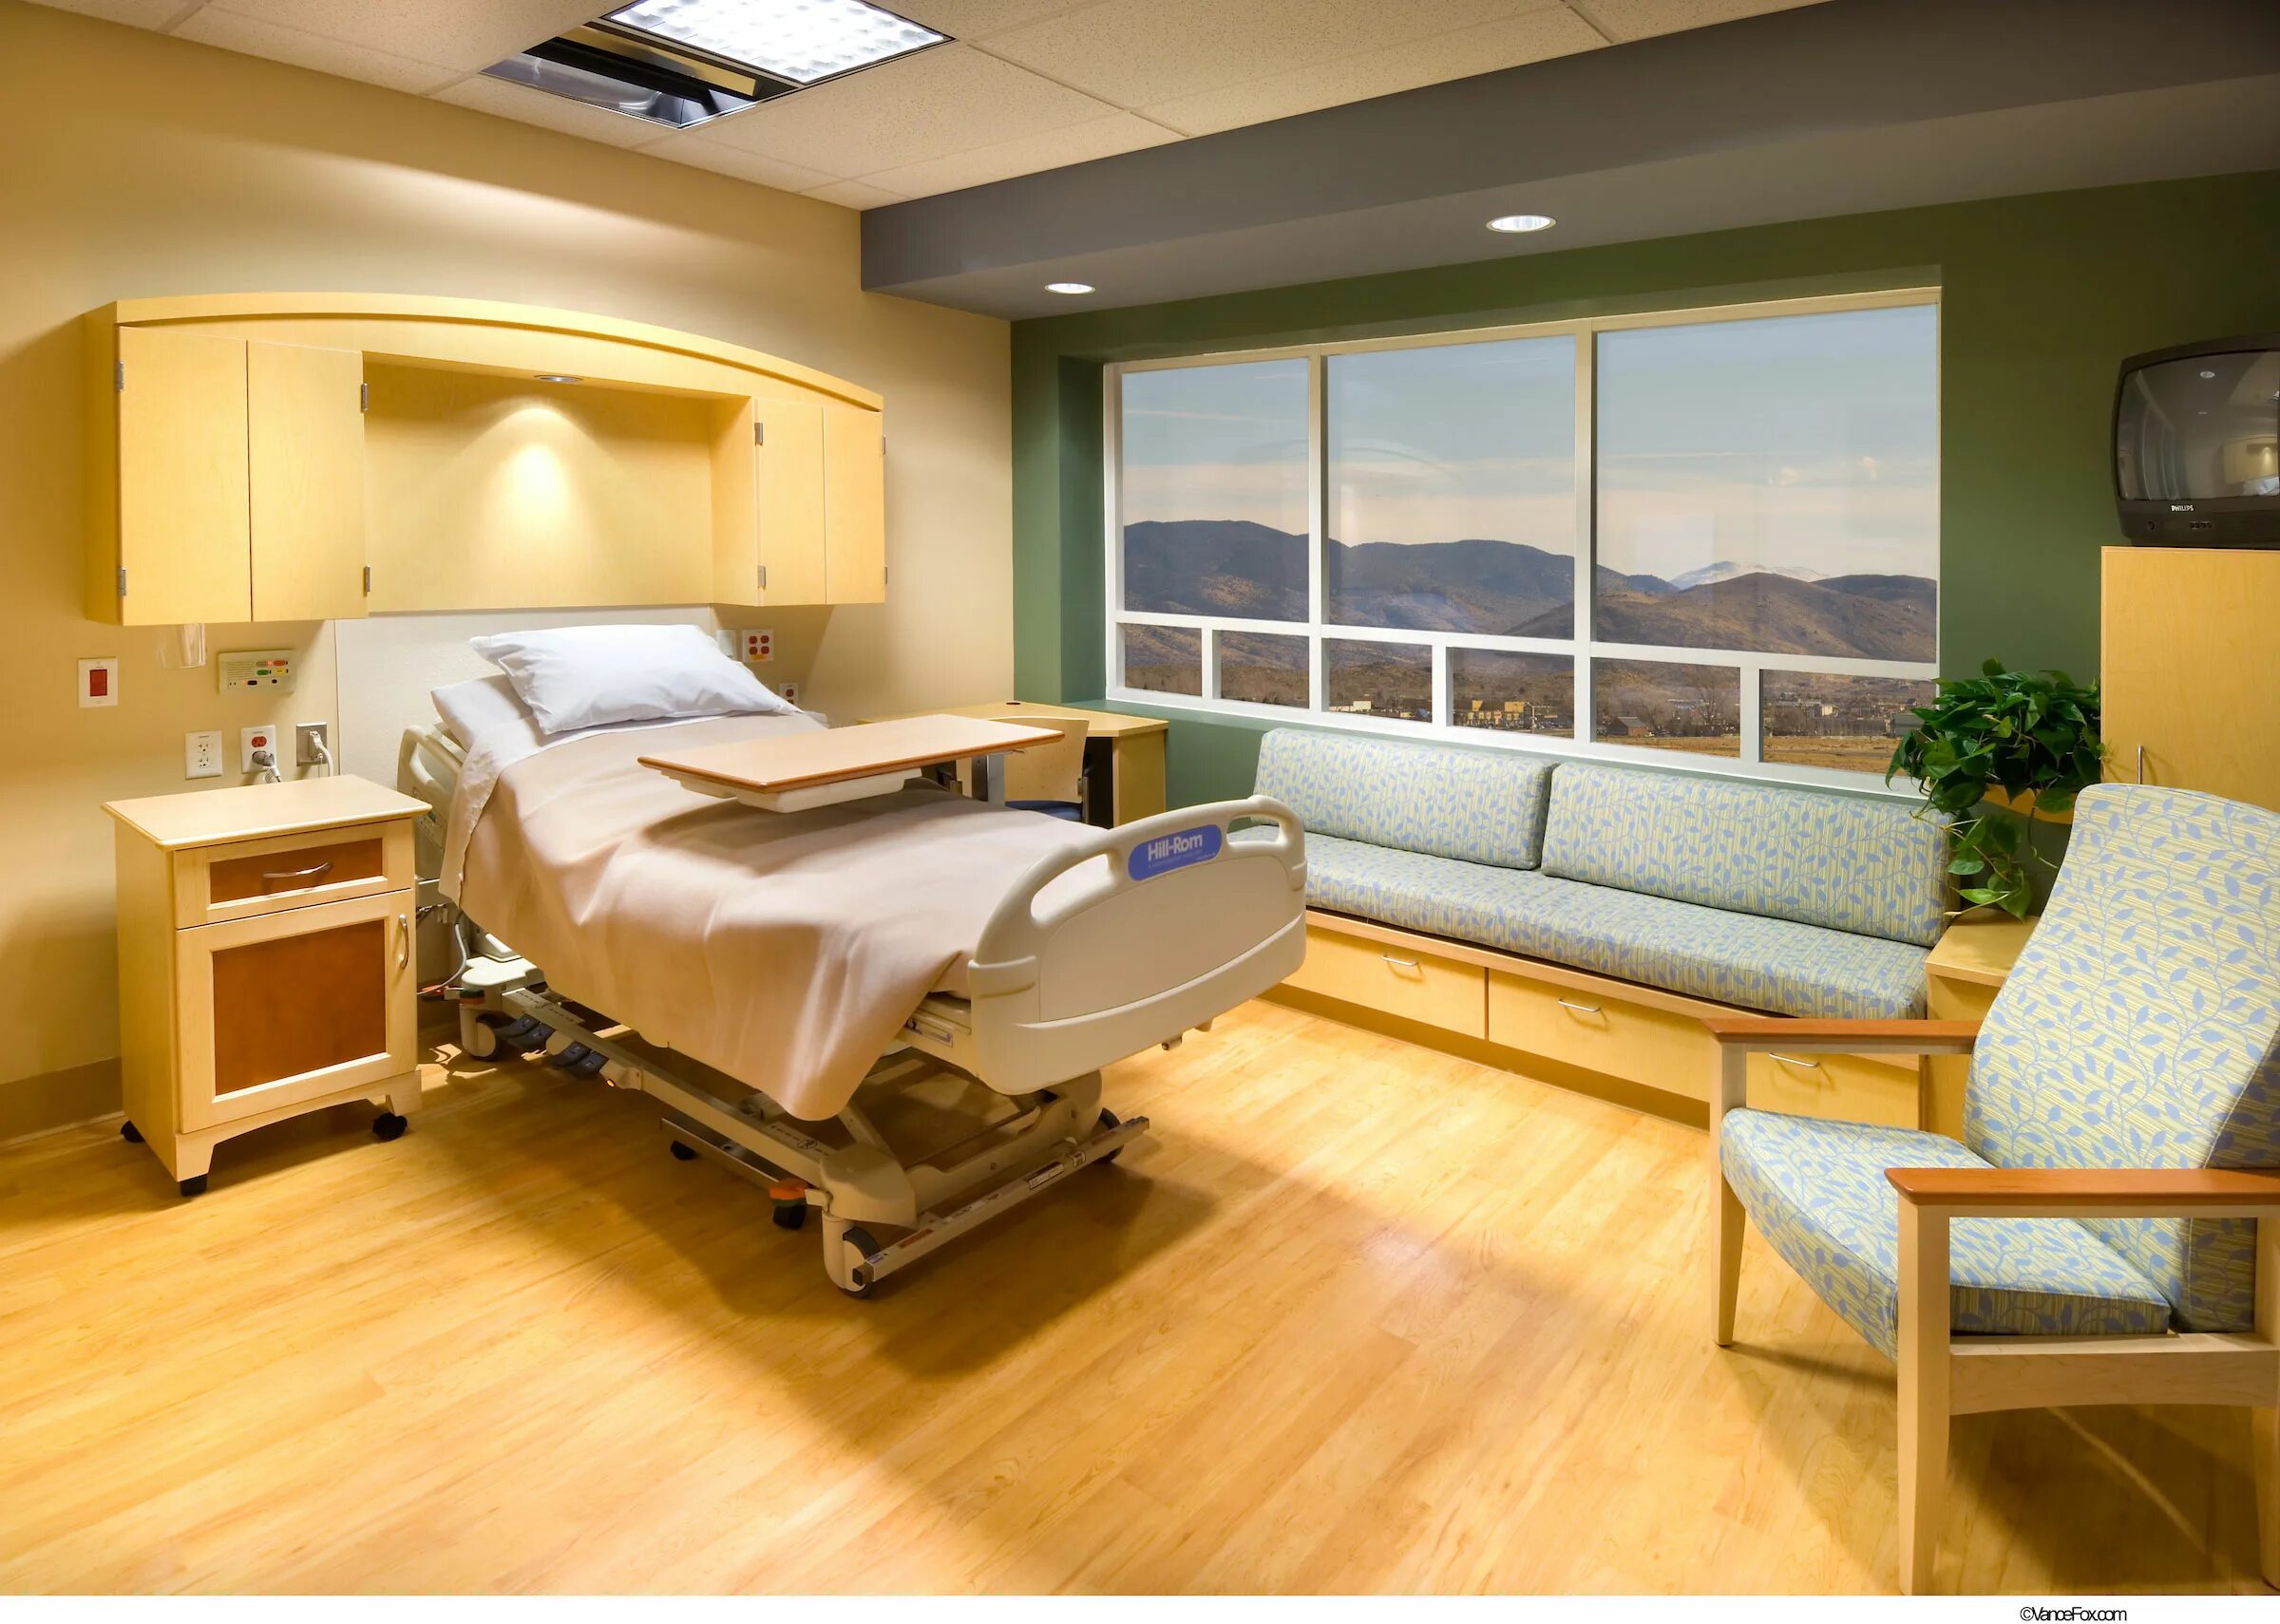 Patient room. Patients Room и их названия. Grand Living Nursing Home Medical Room. The importance of Hospital Rooms Lighting Slayt.